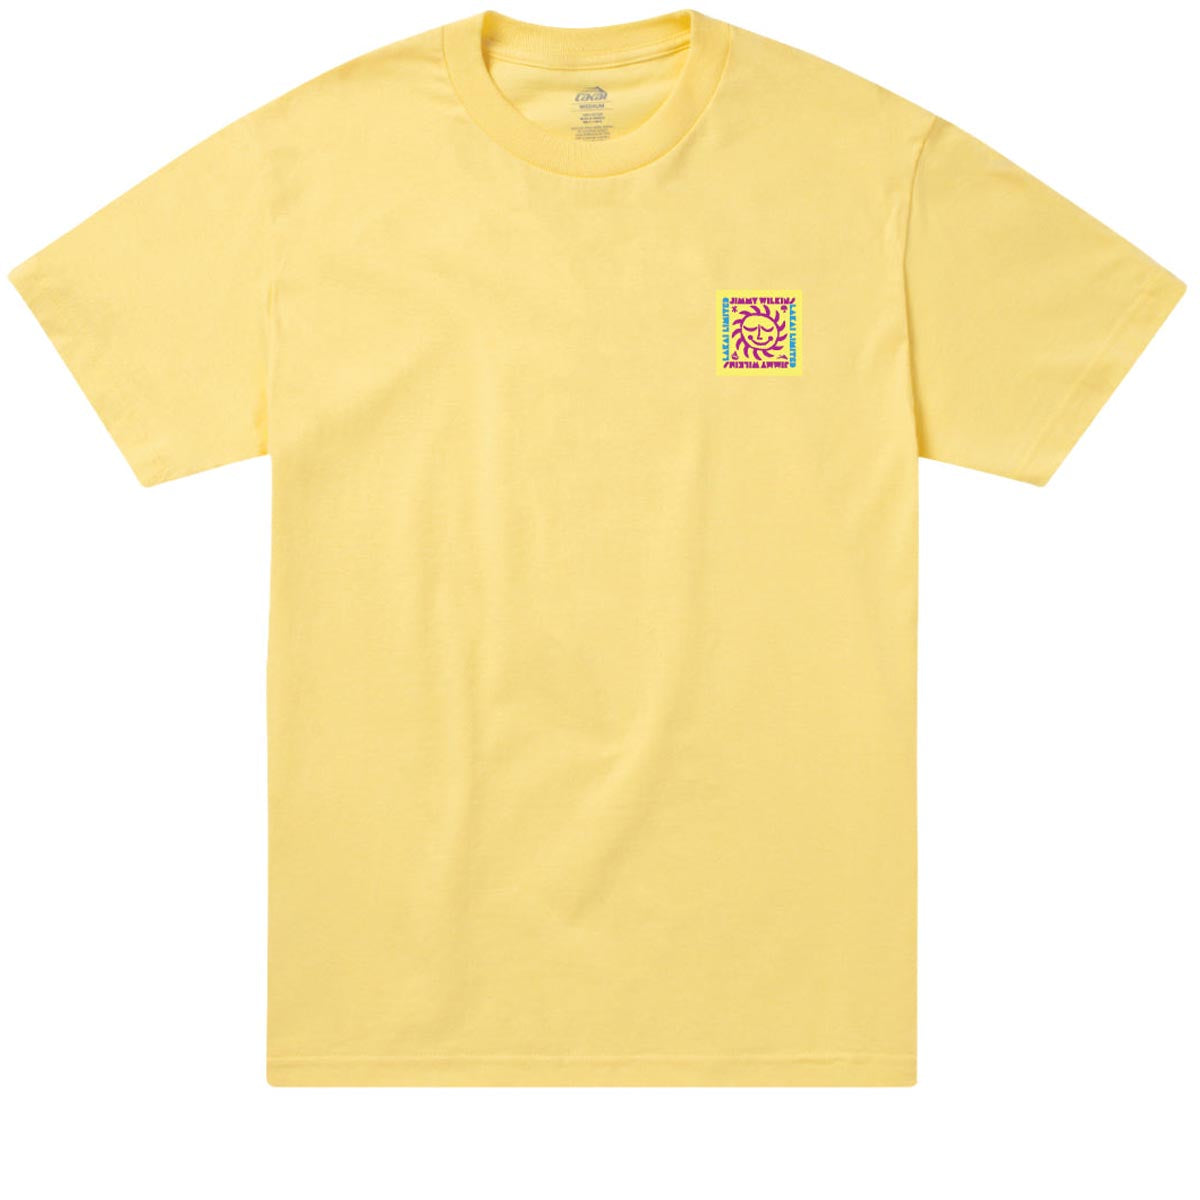 Lakai Sunny T-Shirt - Yellow image 2